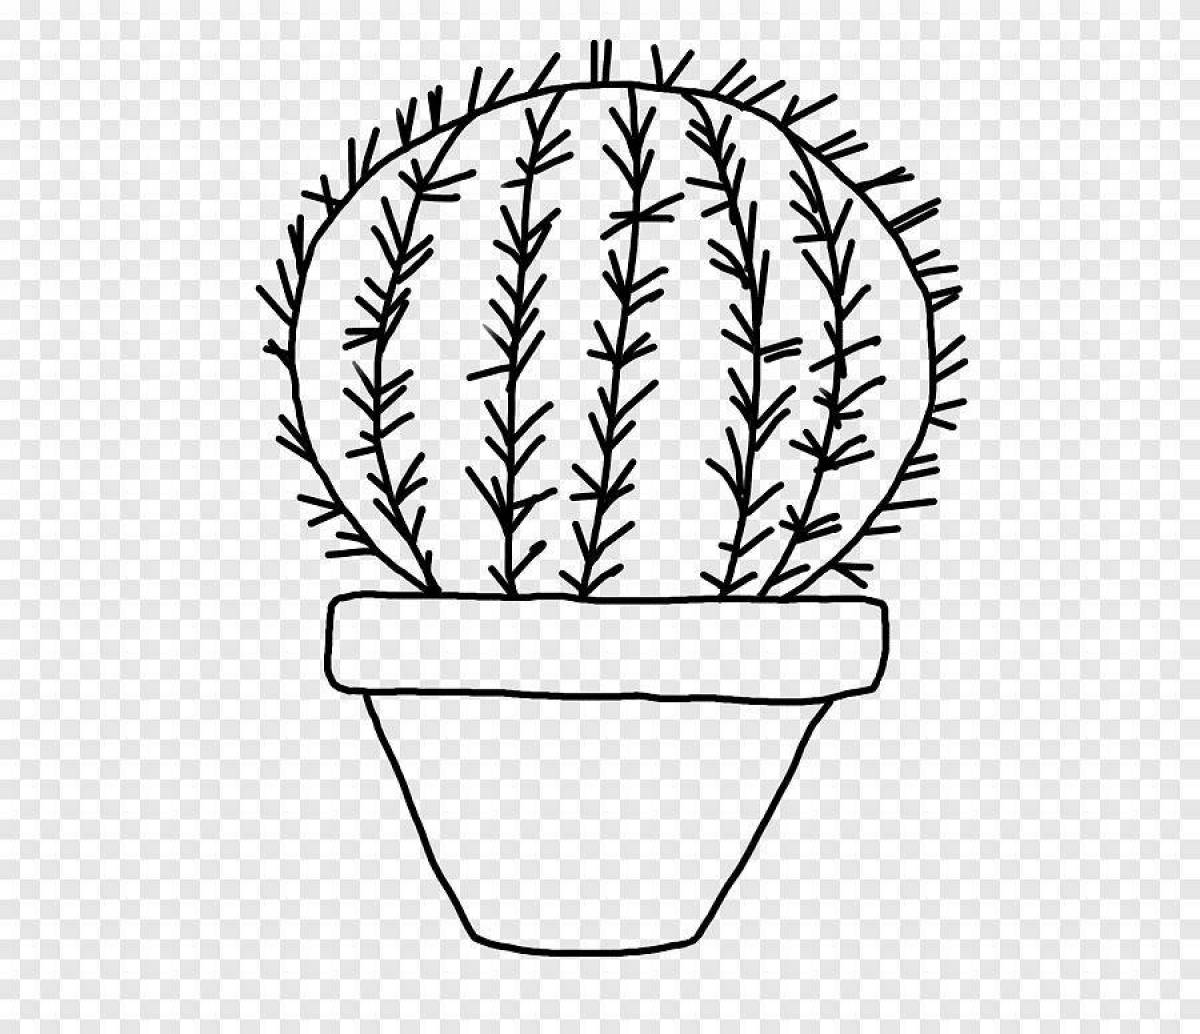 Radiant cactus in a pot